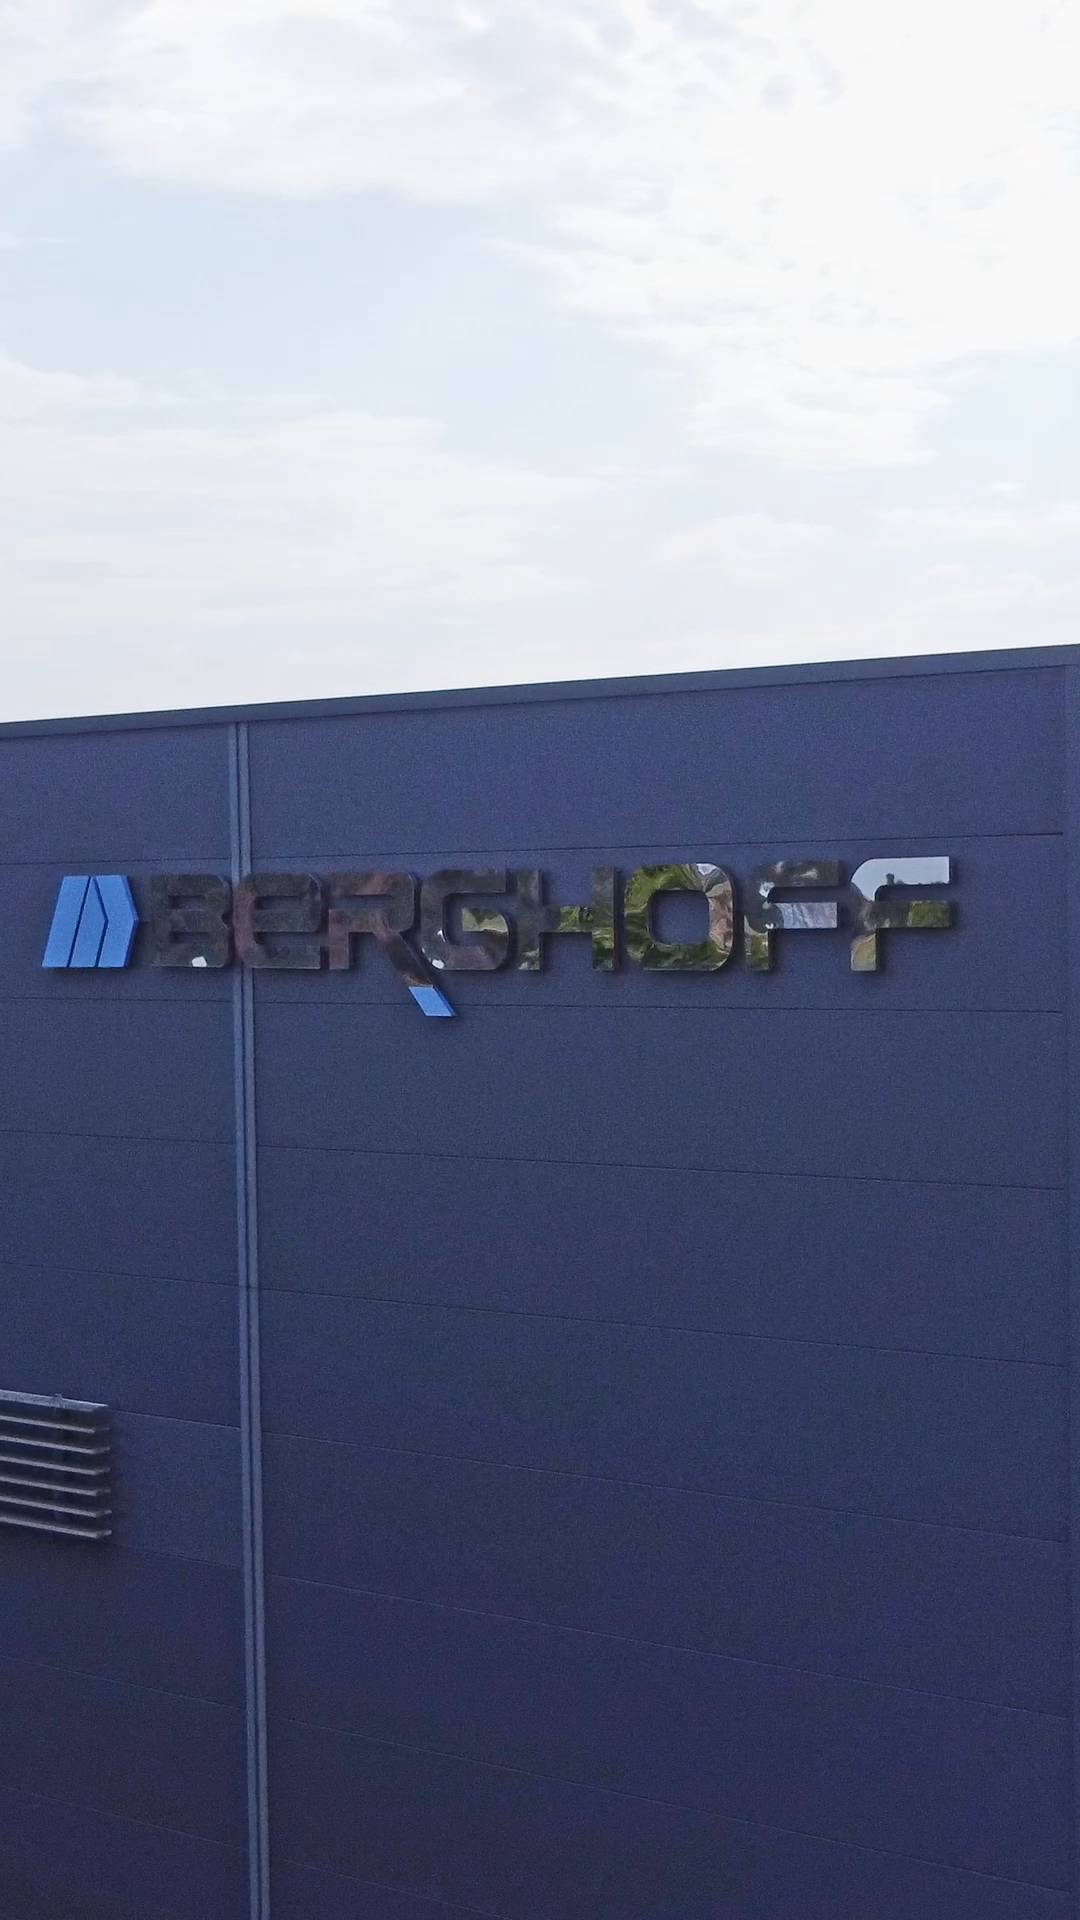 Berghoff GmbH